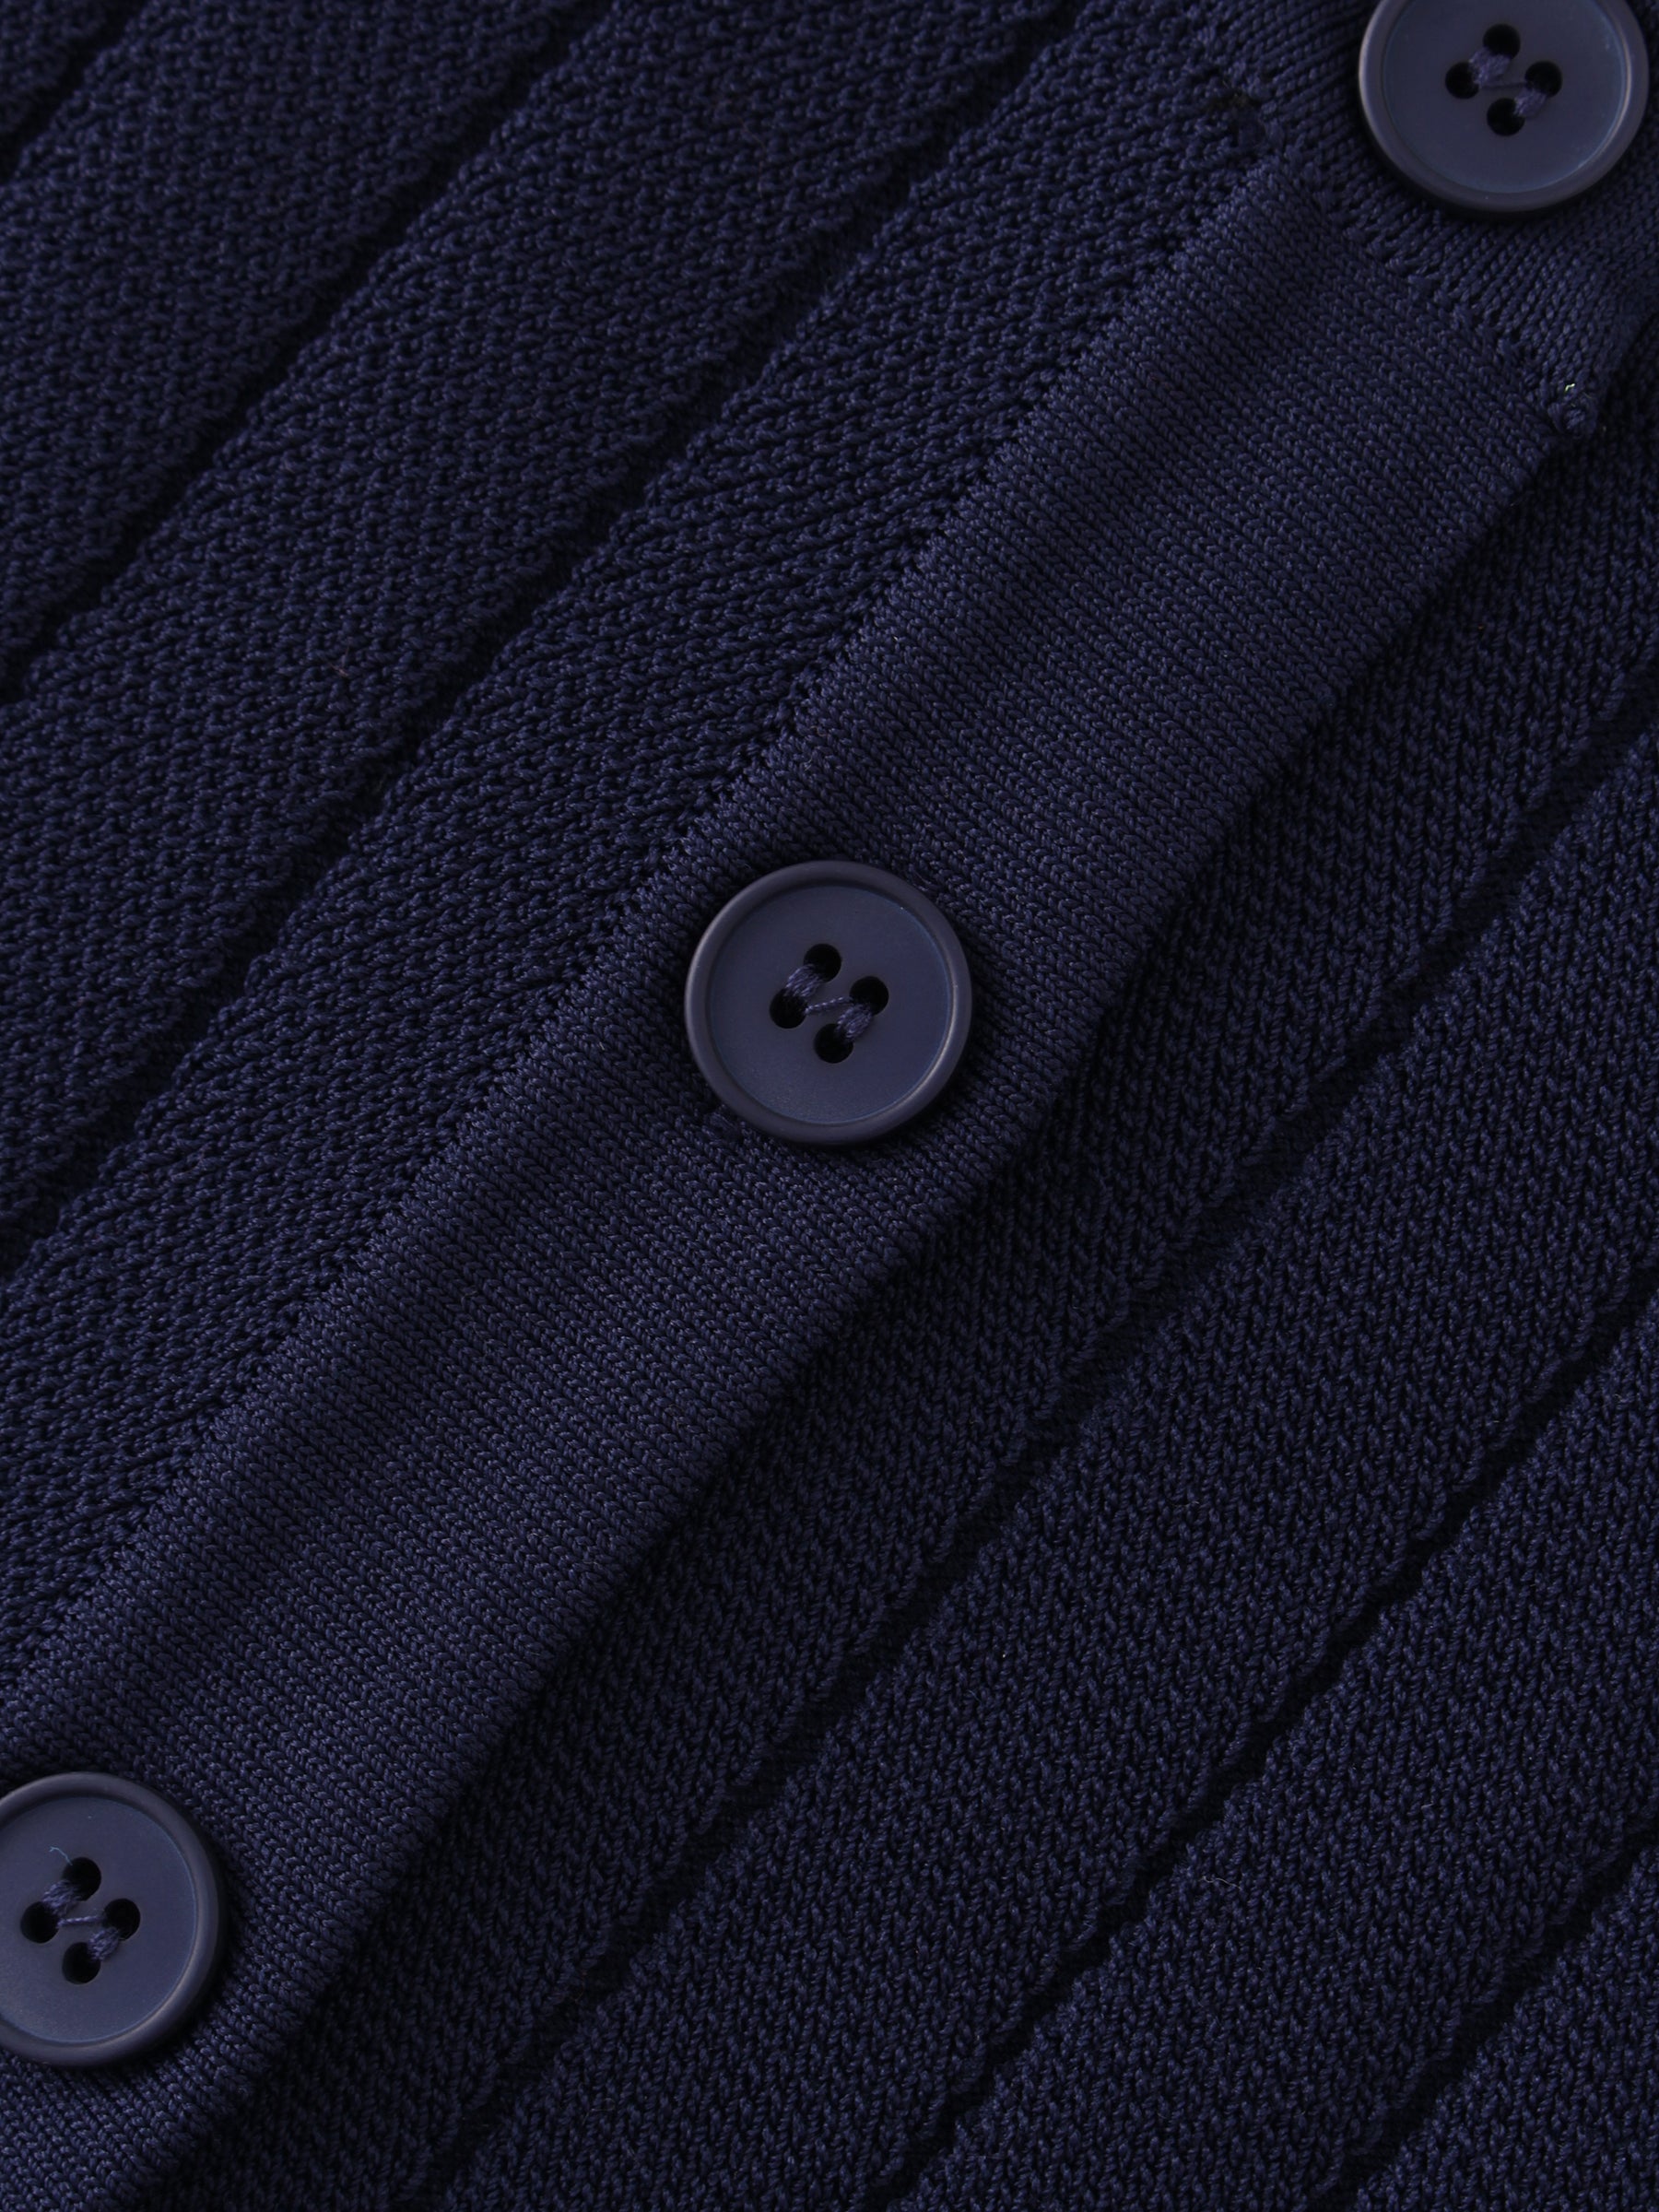 Silk Knit Cropped Cardigan-Navy